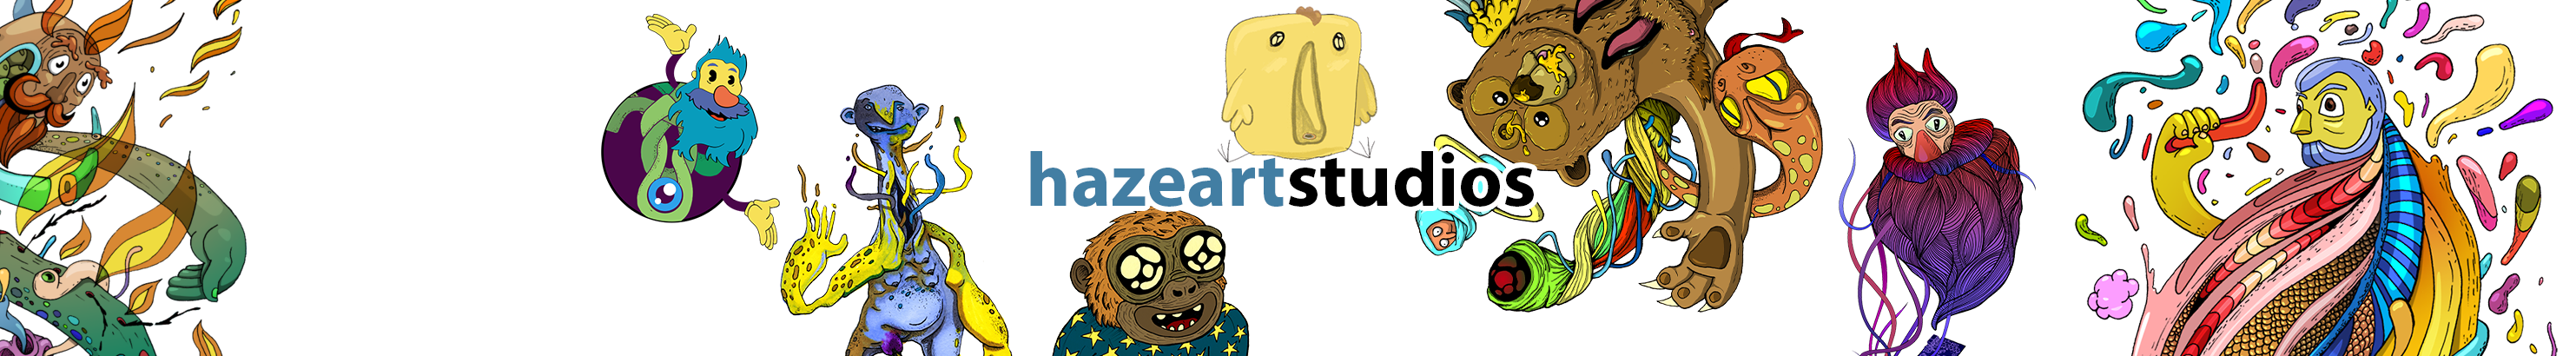 Hazeart Studios's profile banner